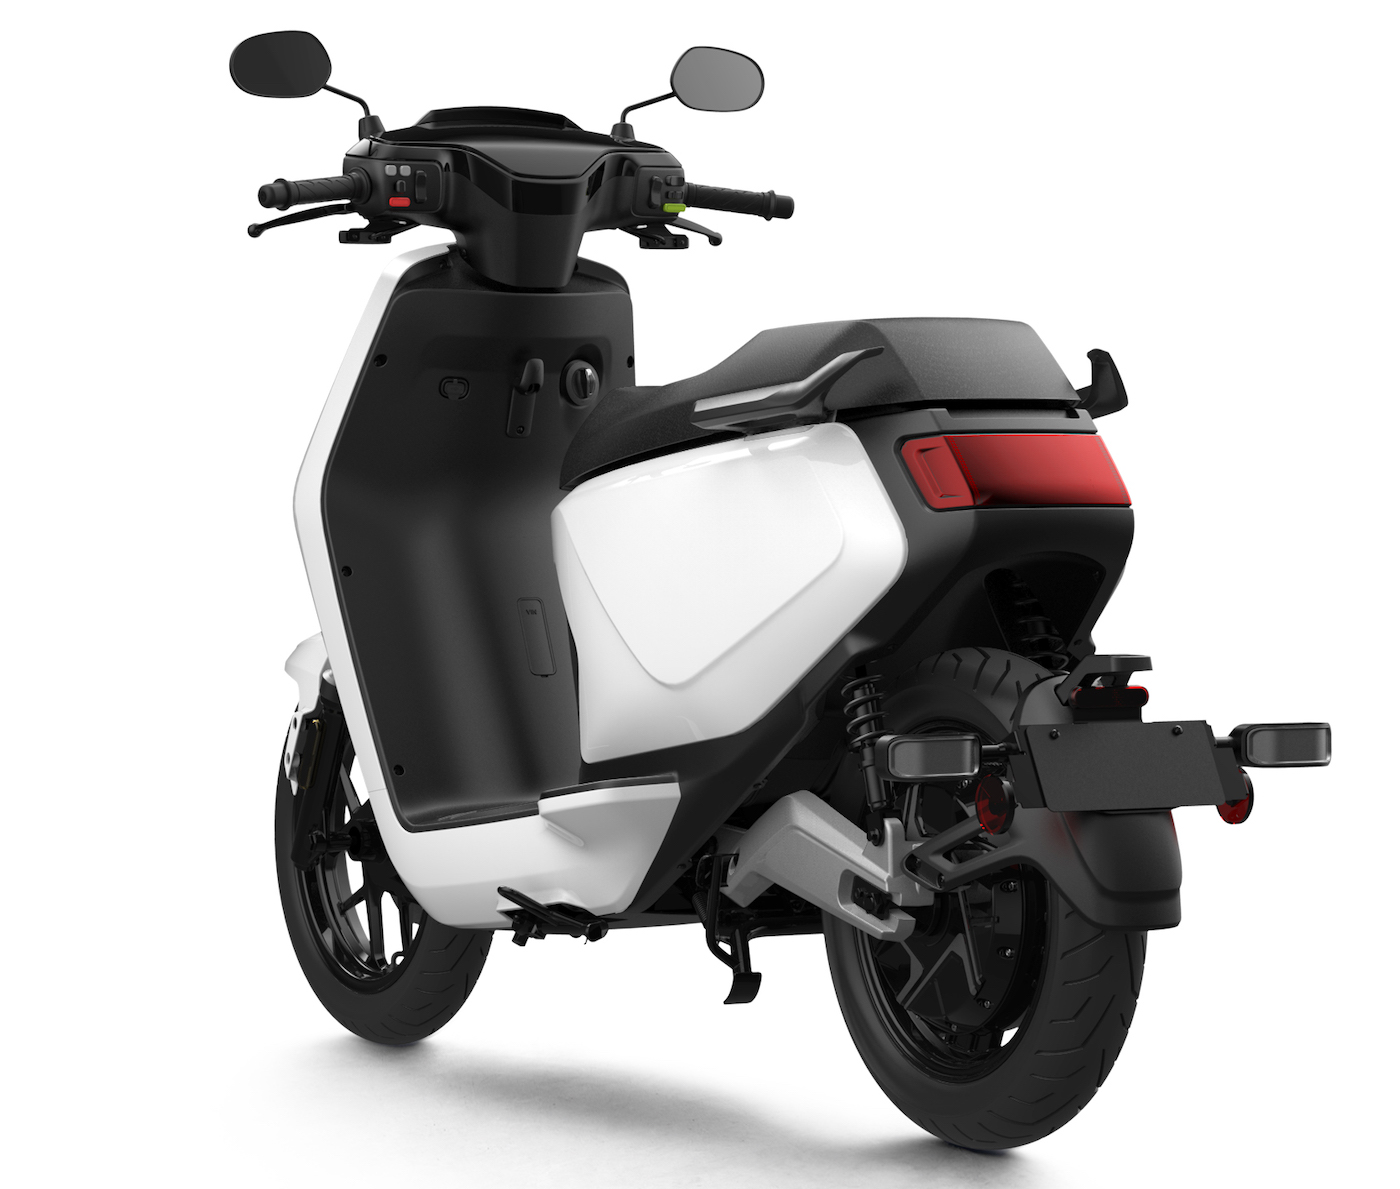 Tablier pour scooter M+ Series NIU - GreenMotorShop